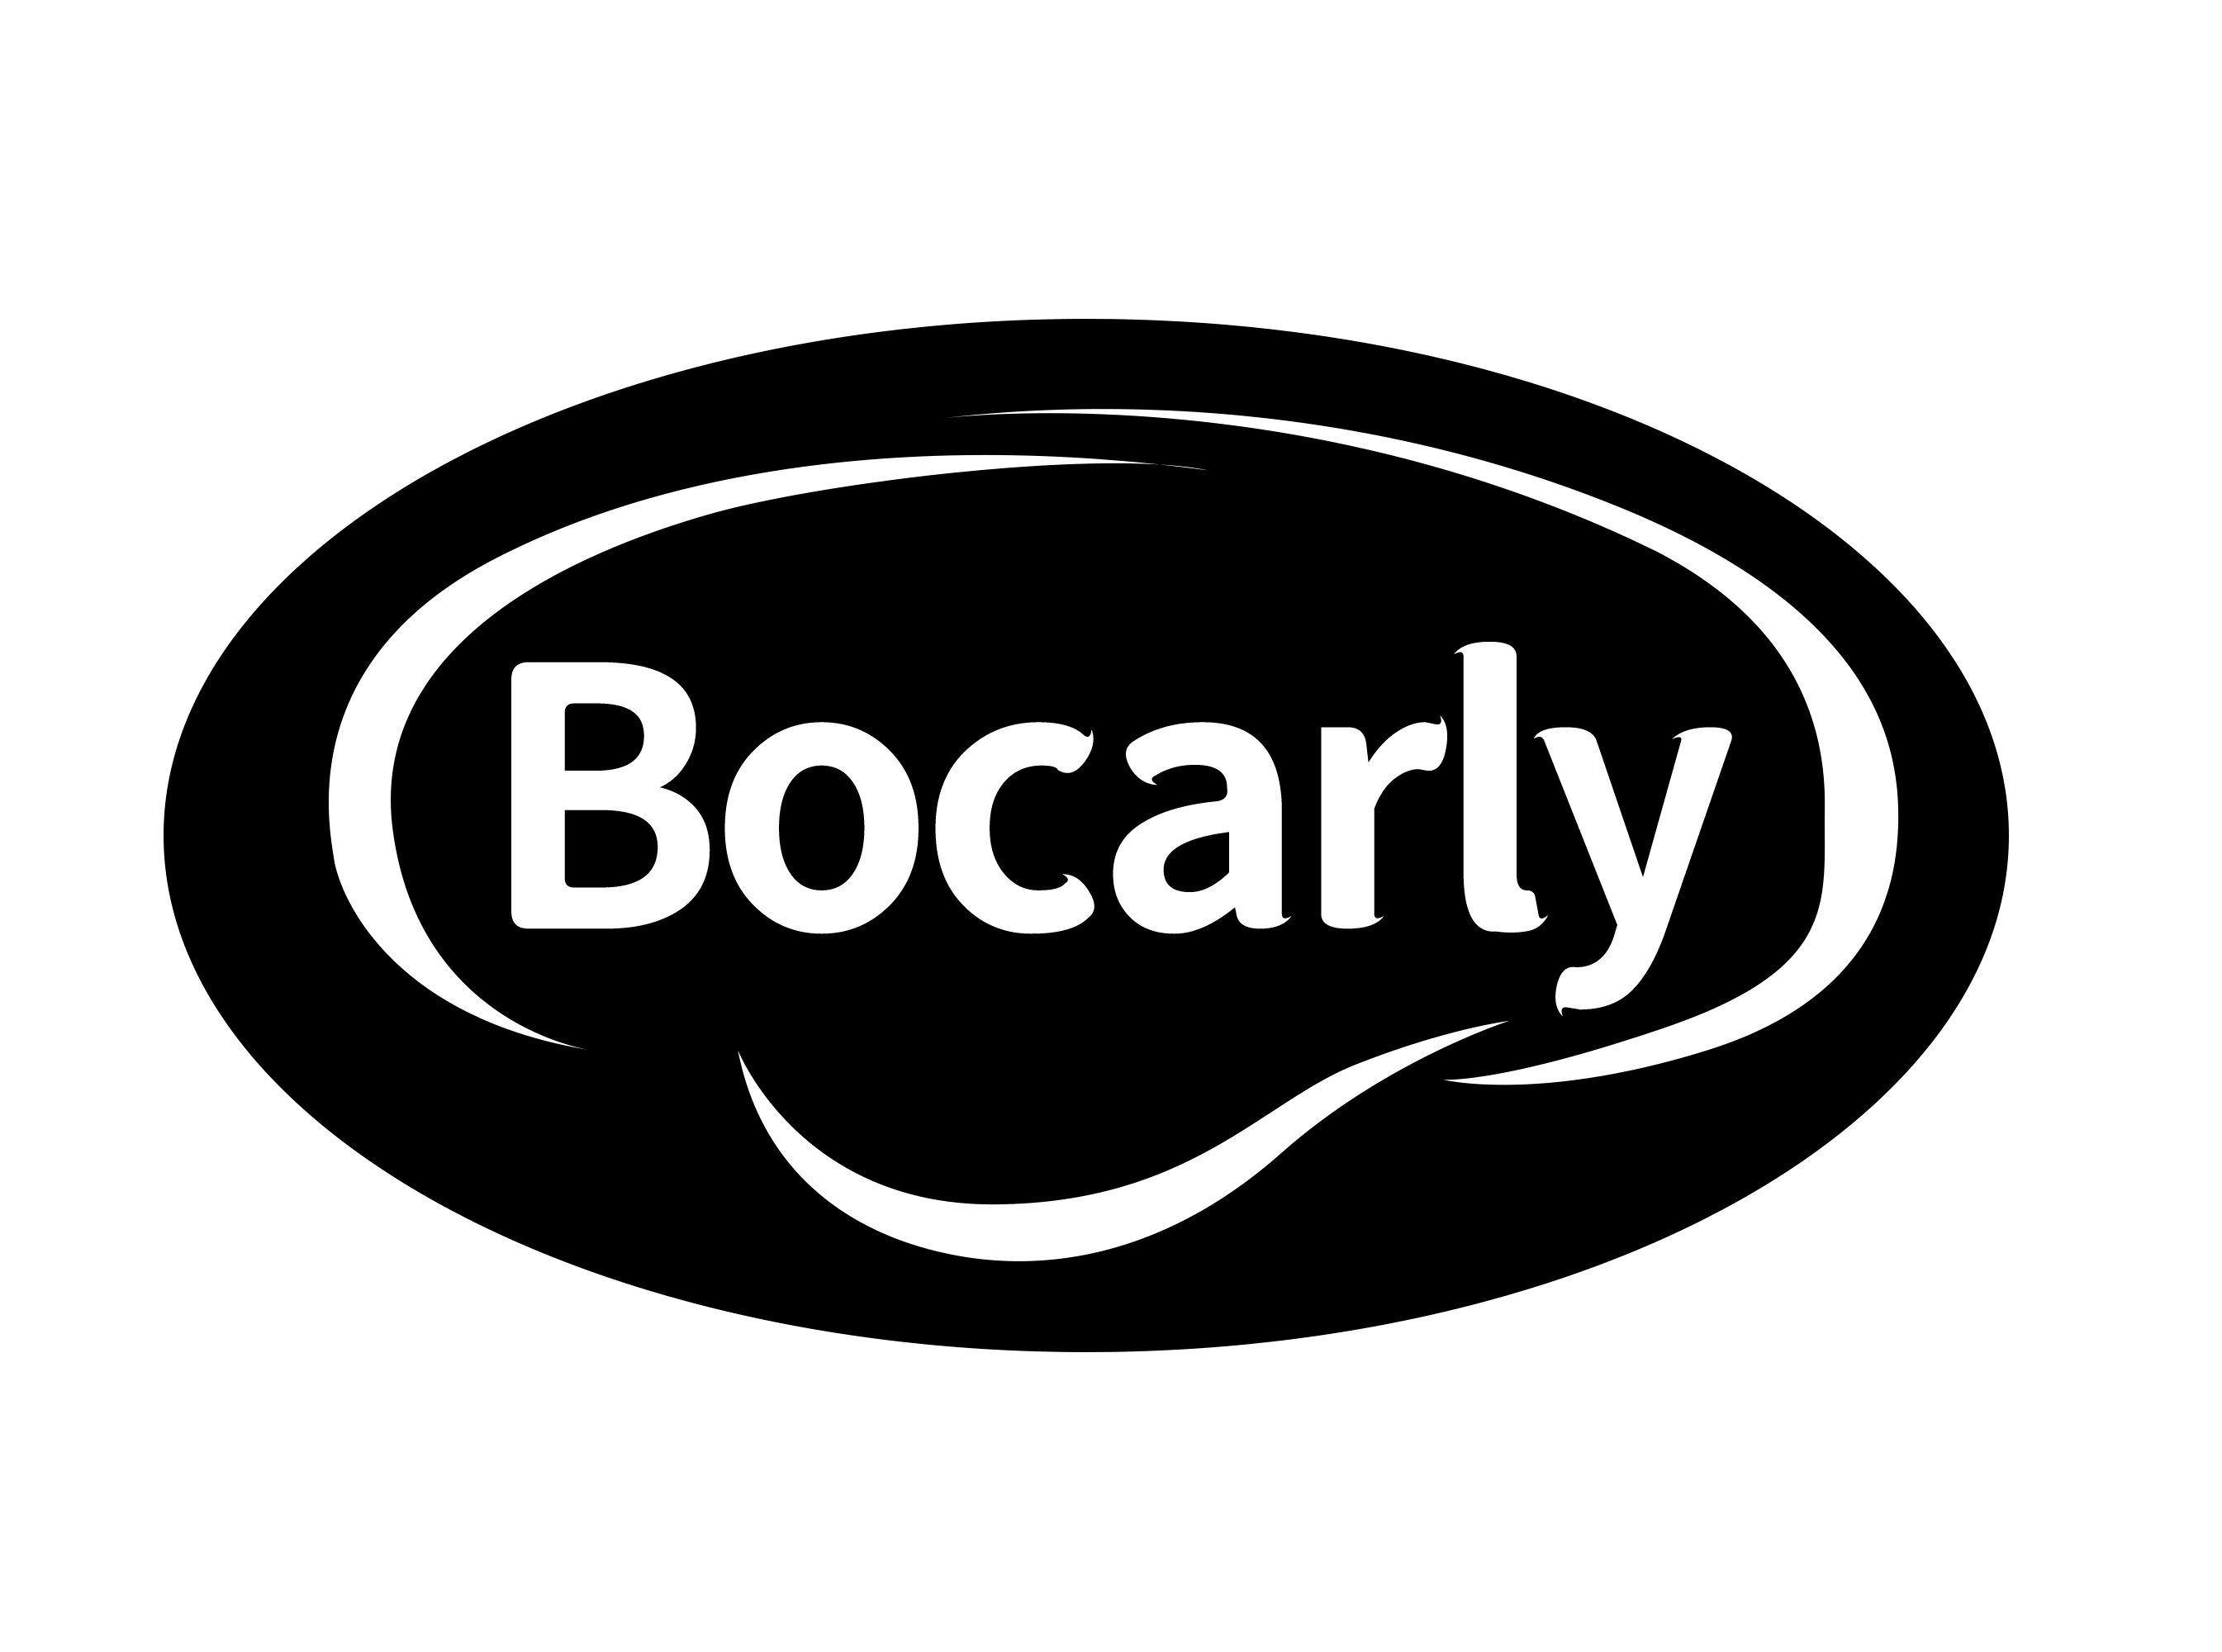 Bocarly